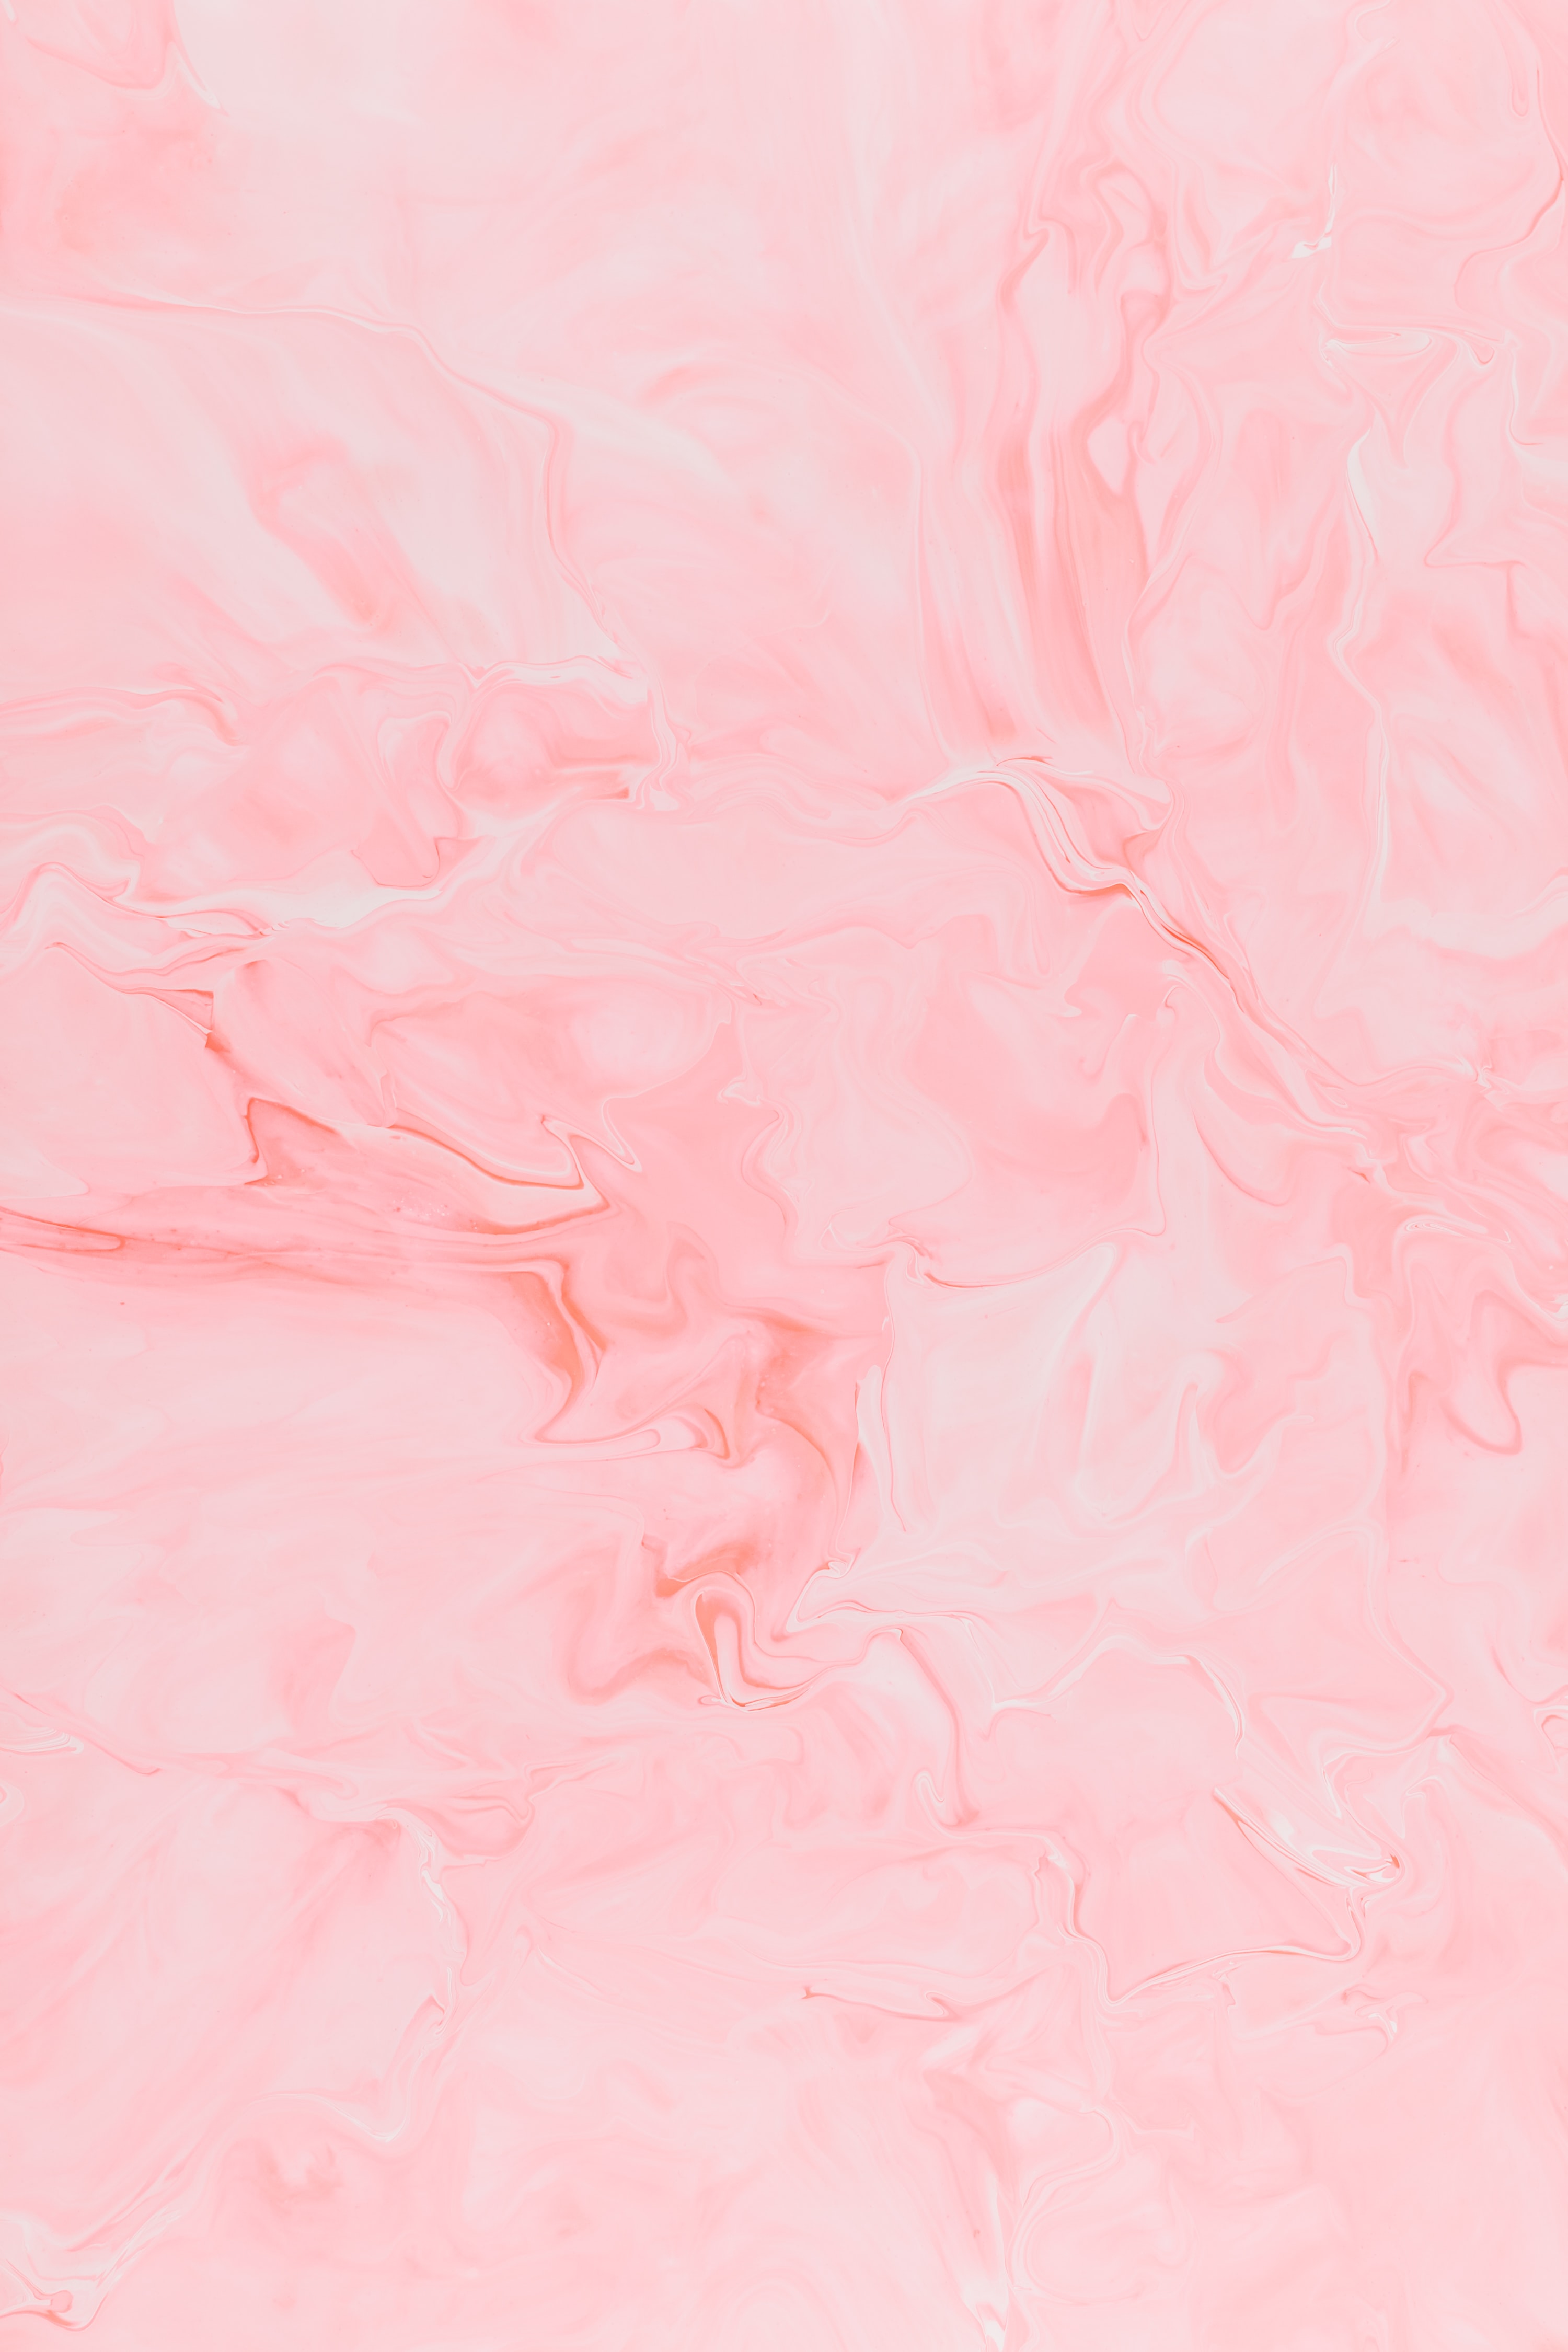 51+ Pink Background Hd